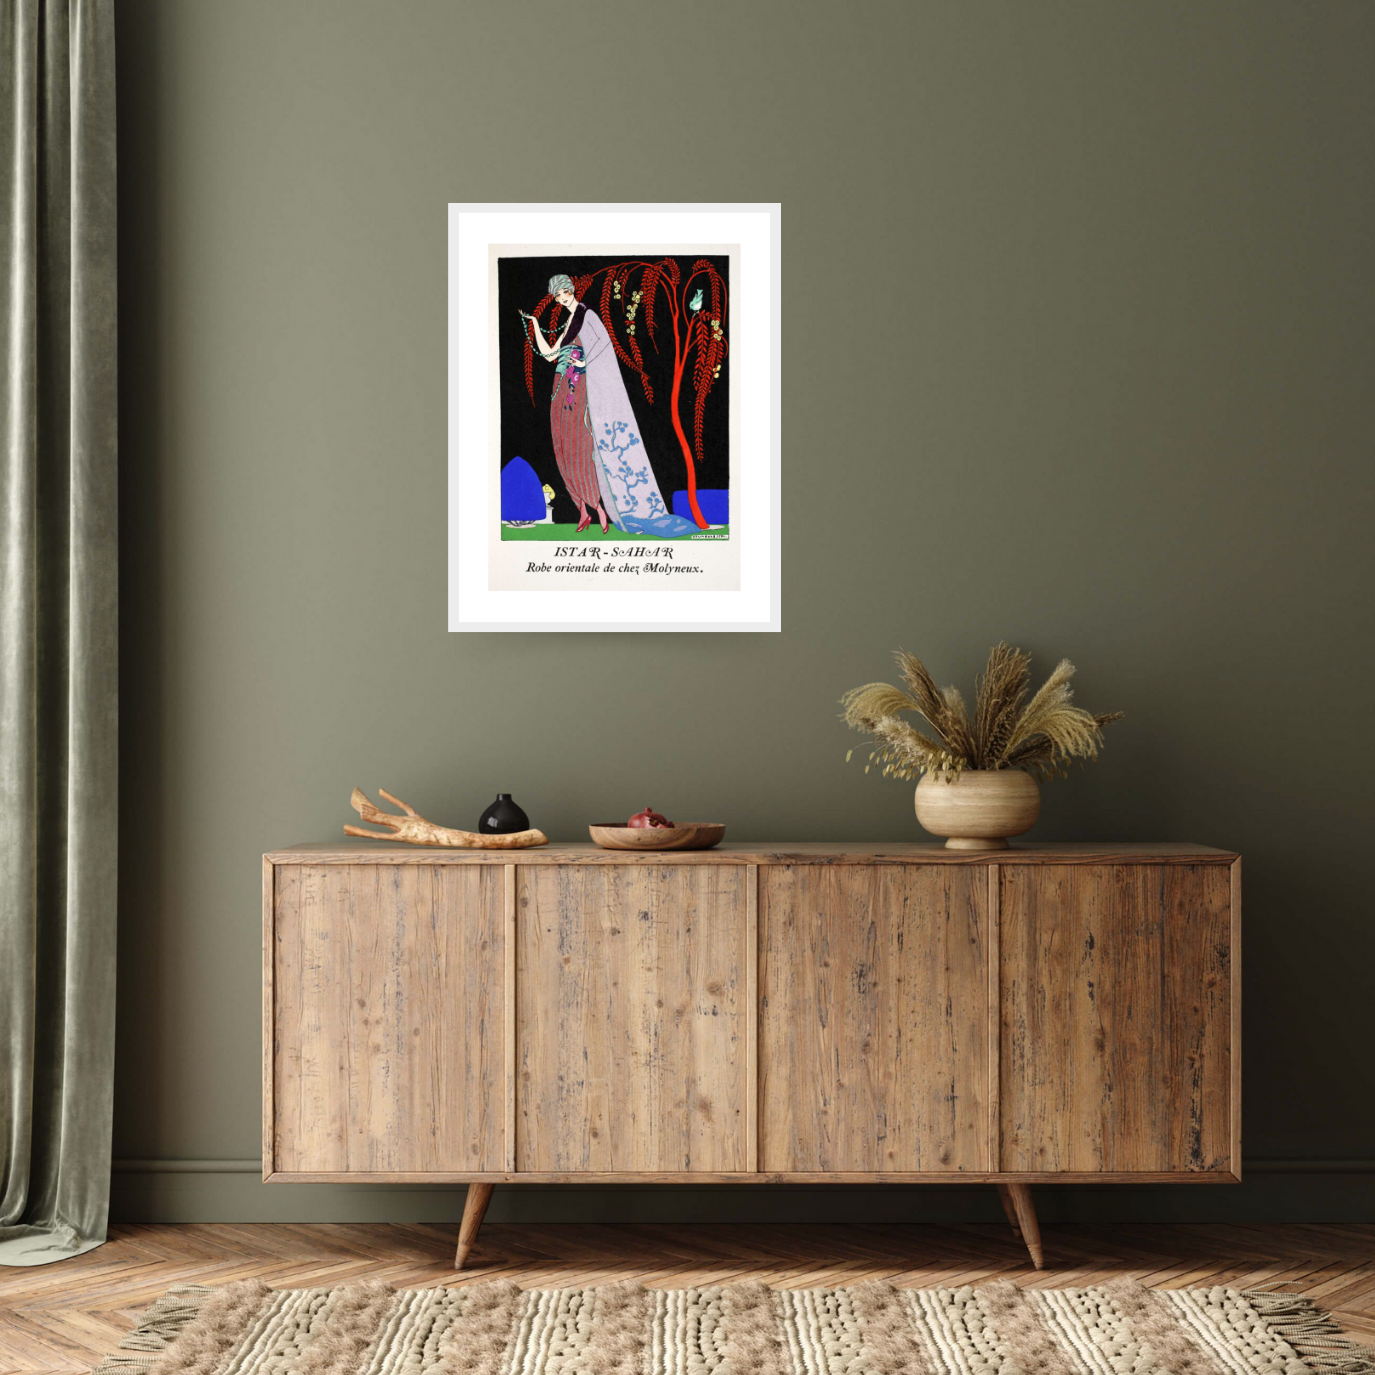 Umberto Brunelleschi, Istar-Sahar Oriental style dress from Molyneux, 1919-21 - Brunelleschi, Fashion Illustration - Bridgeman Editions, Painting, Umberto (1879-1949) by  Bridgeman Editions